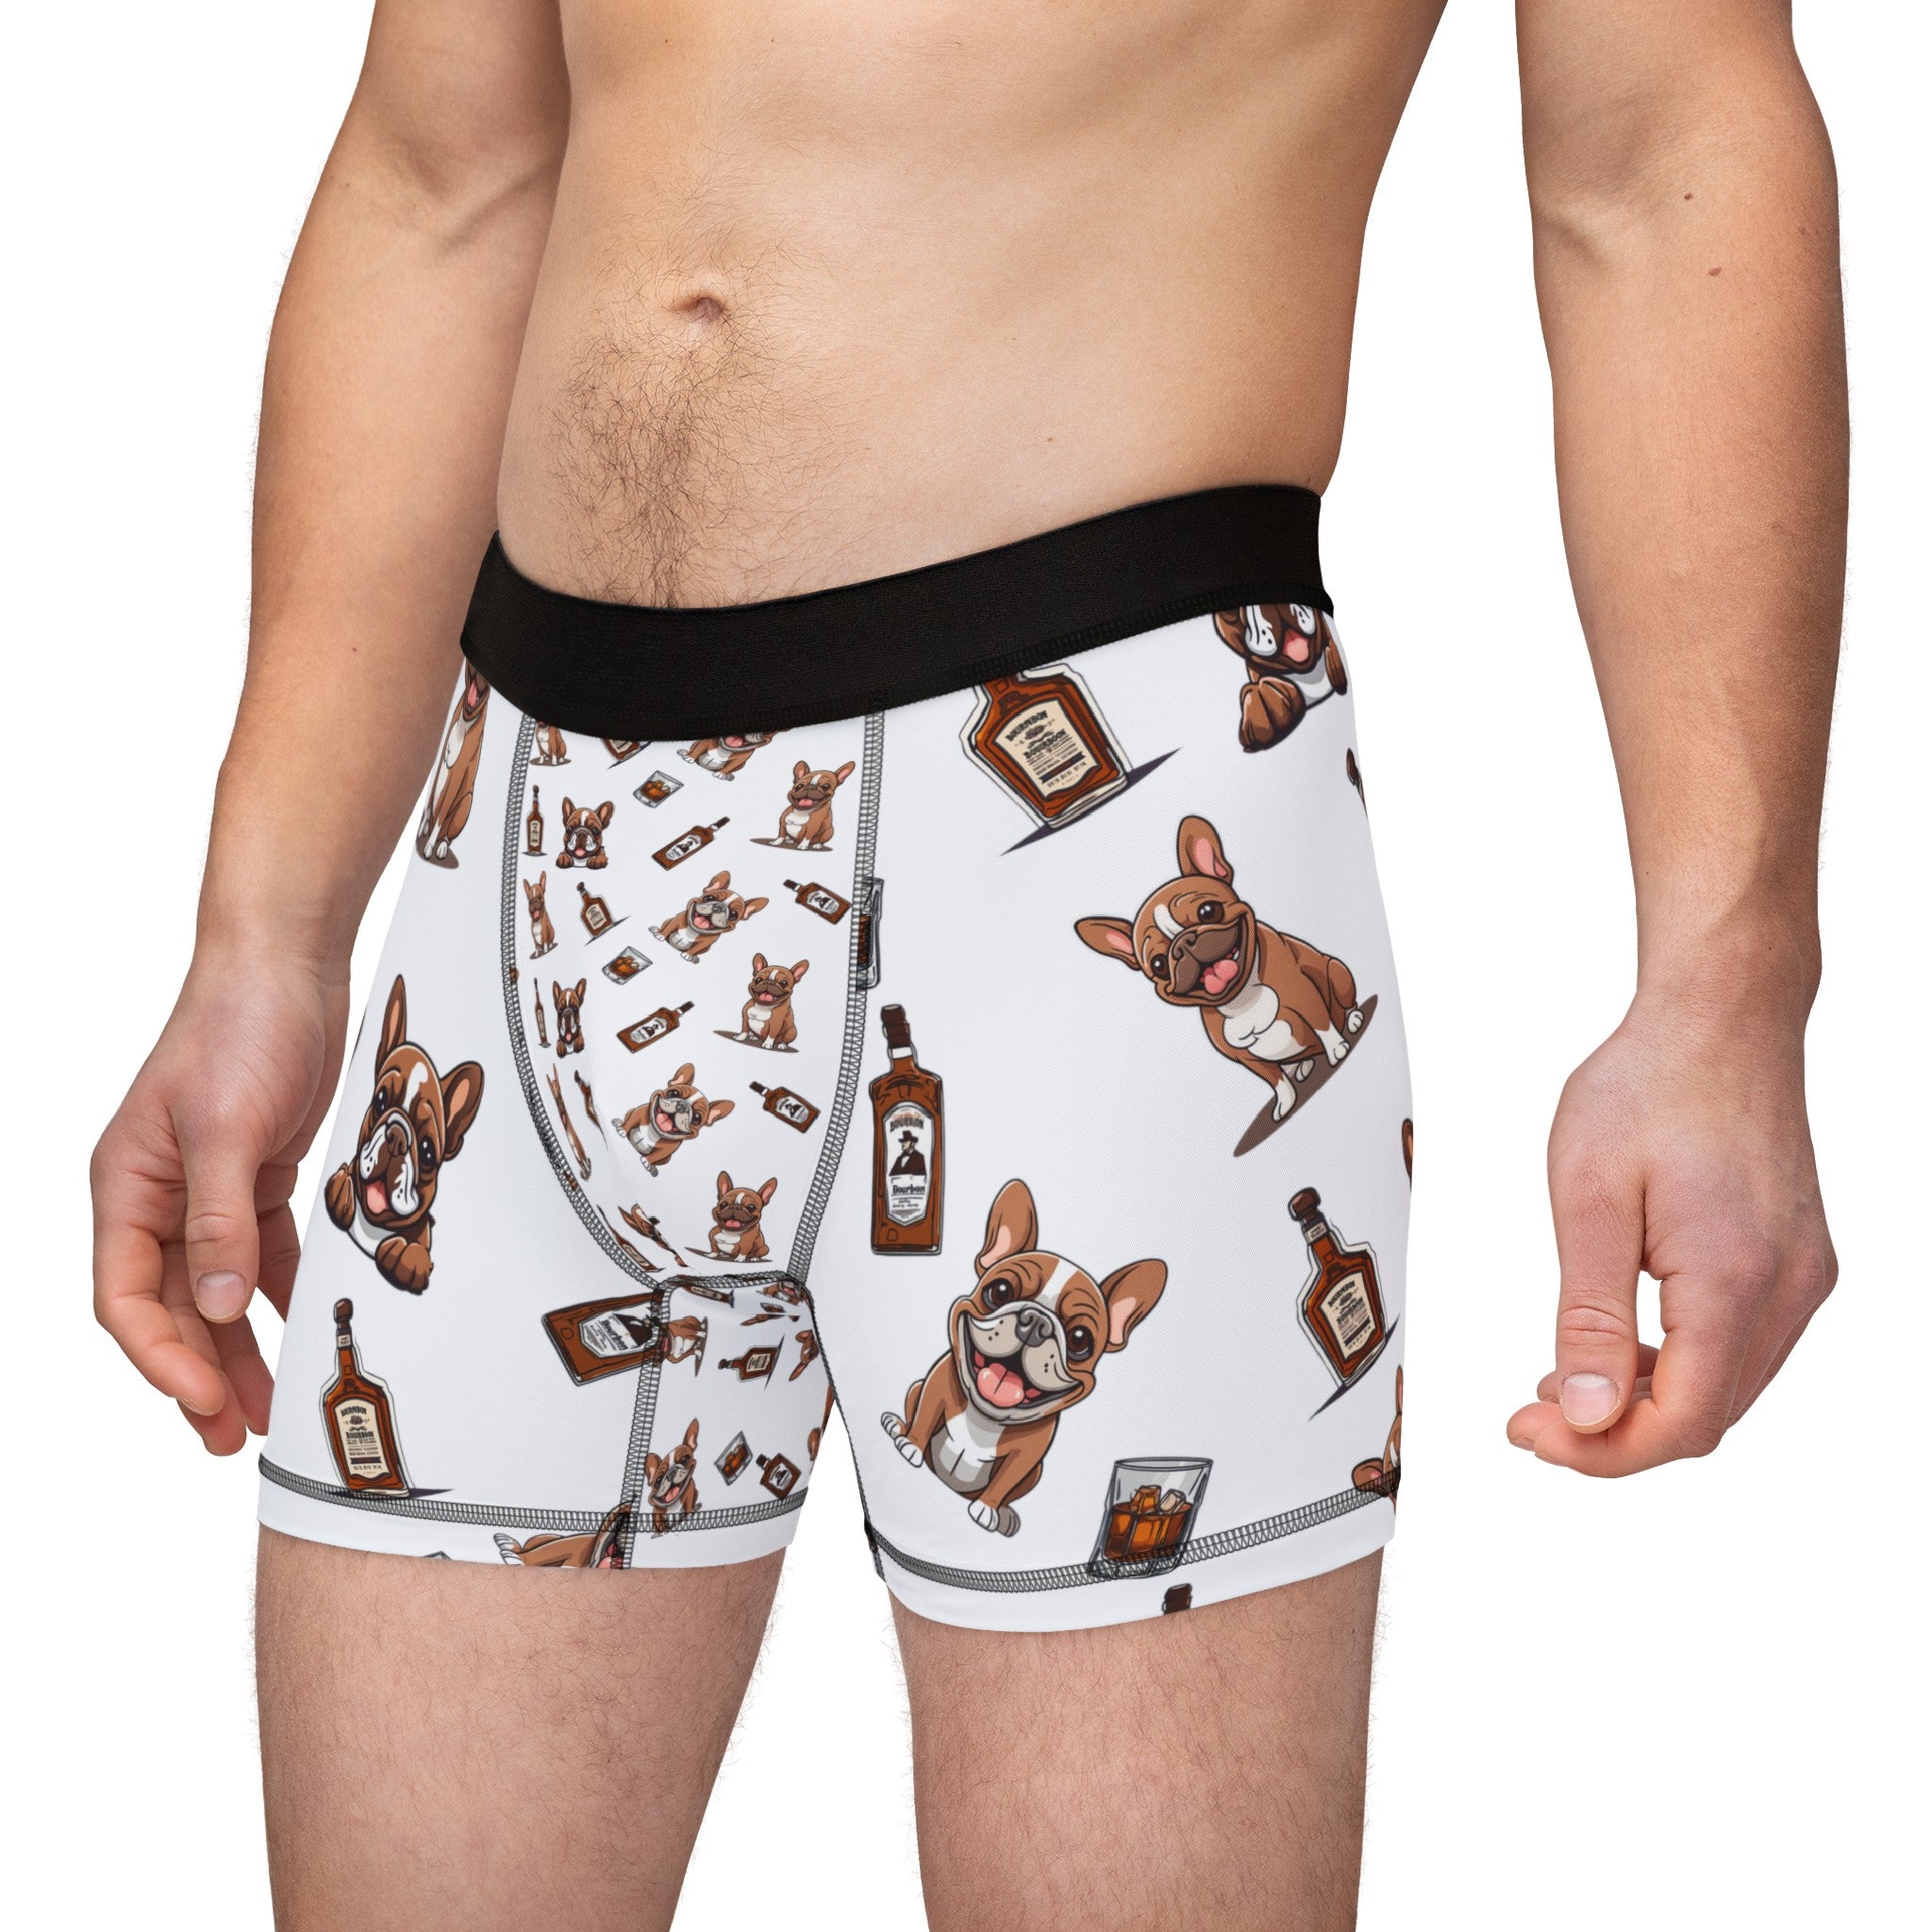 Tipsy Bully Bulldogs & Bourbon Men's Underwear (French/Brown)